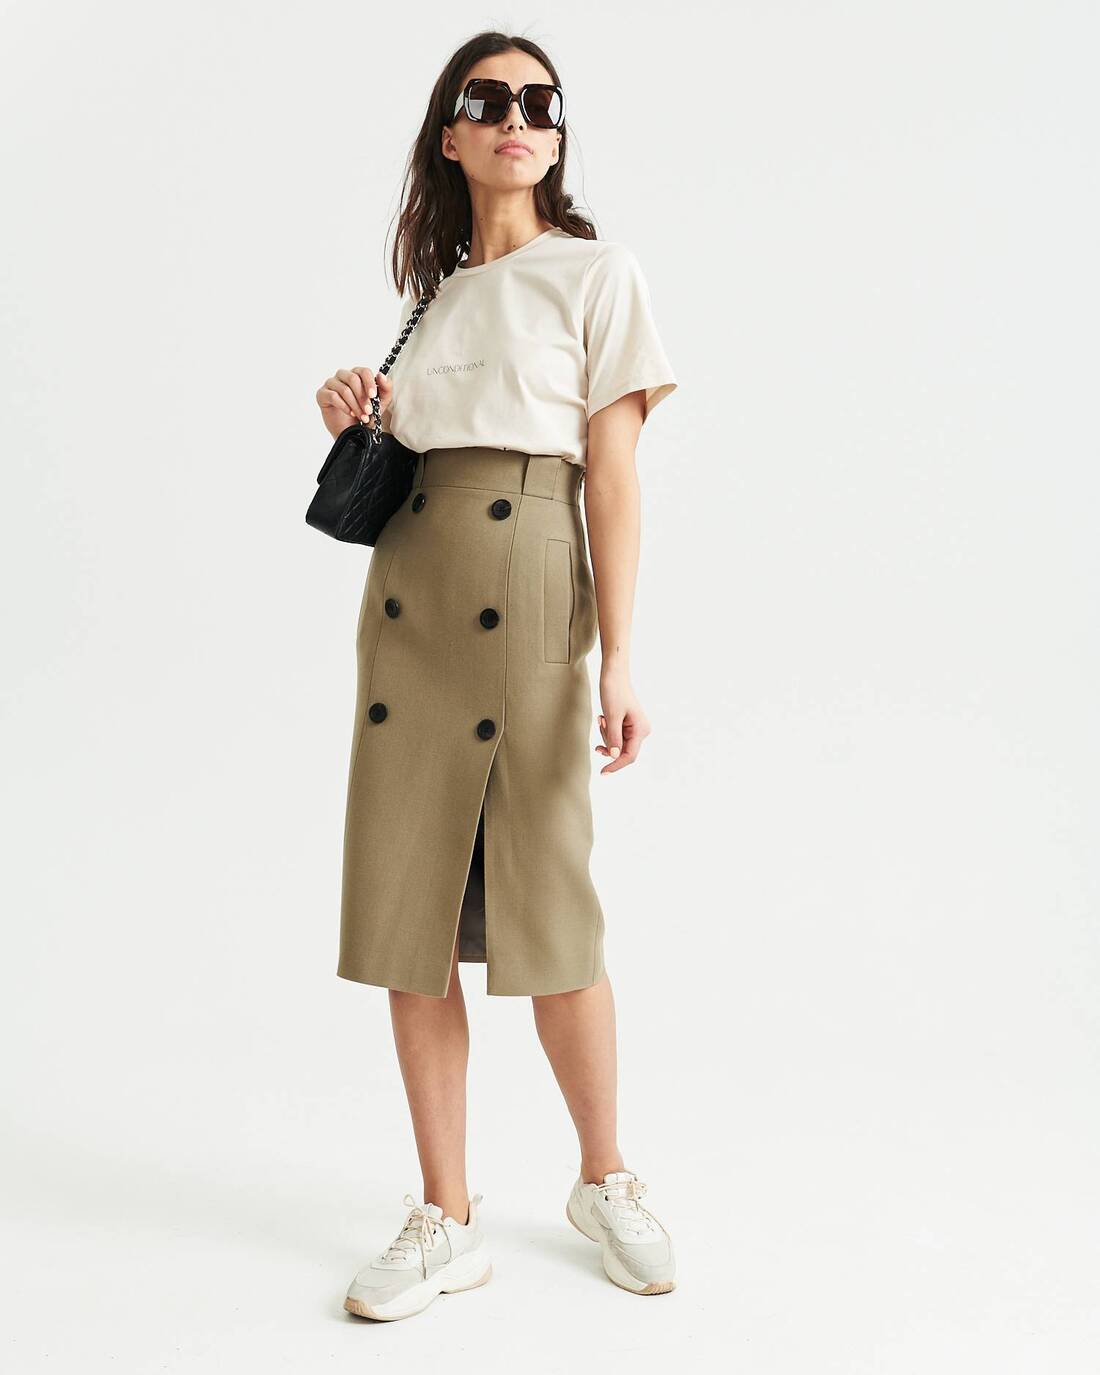 Buttoned midi pencil skirt